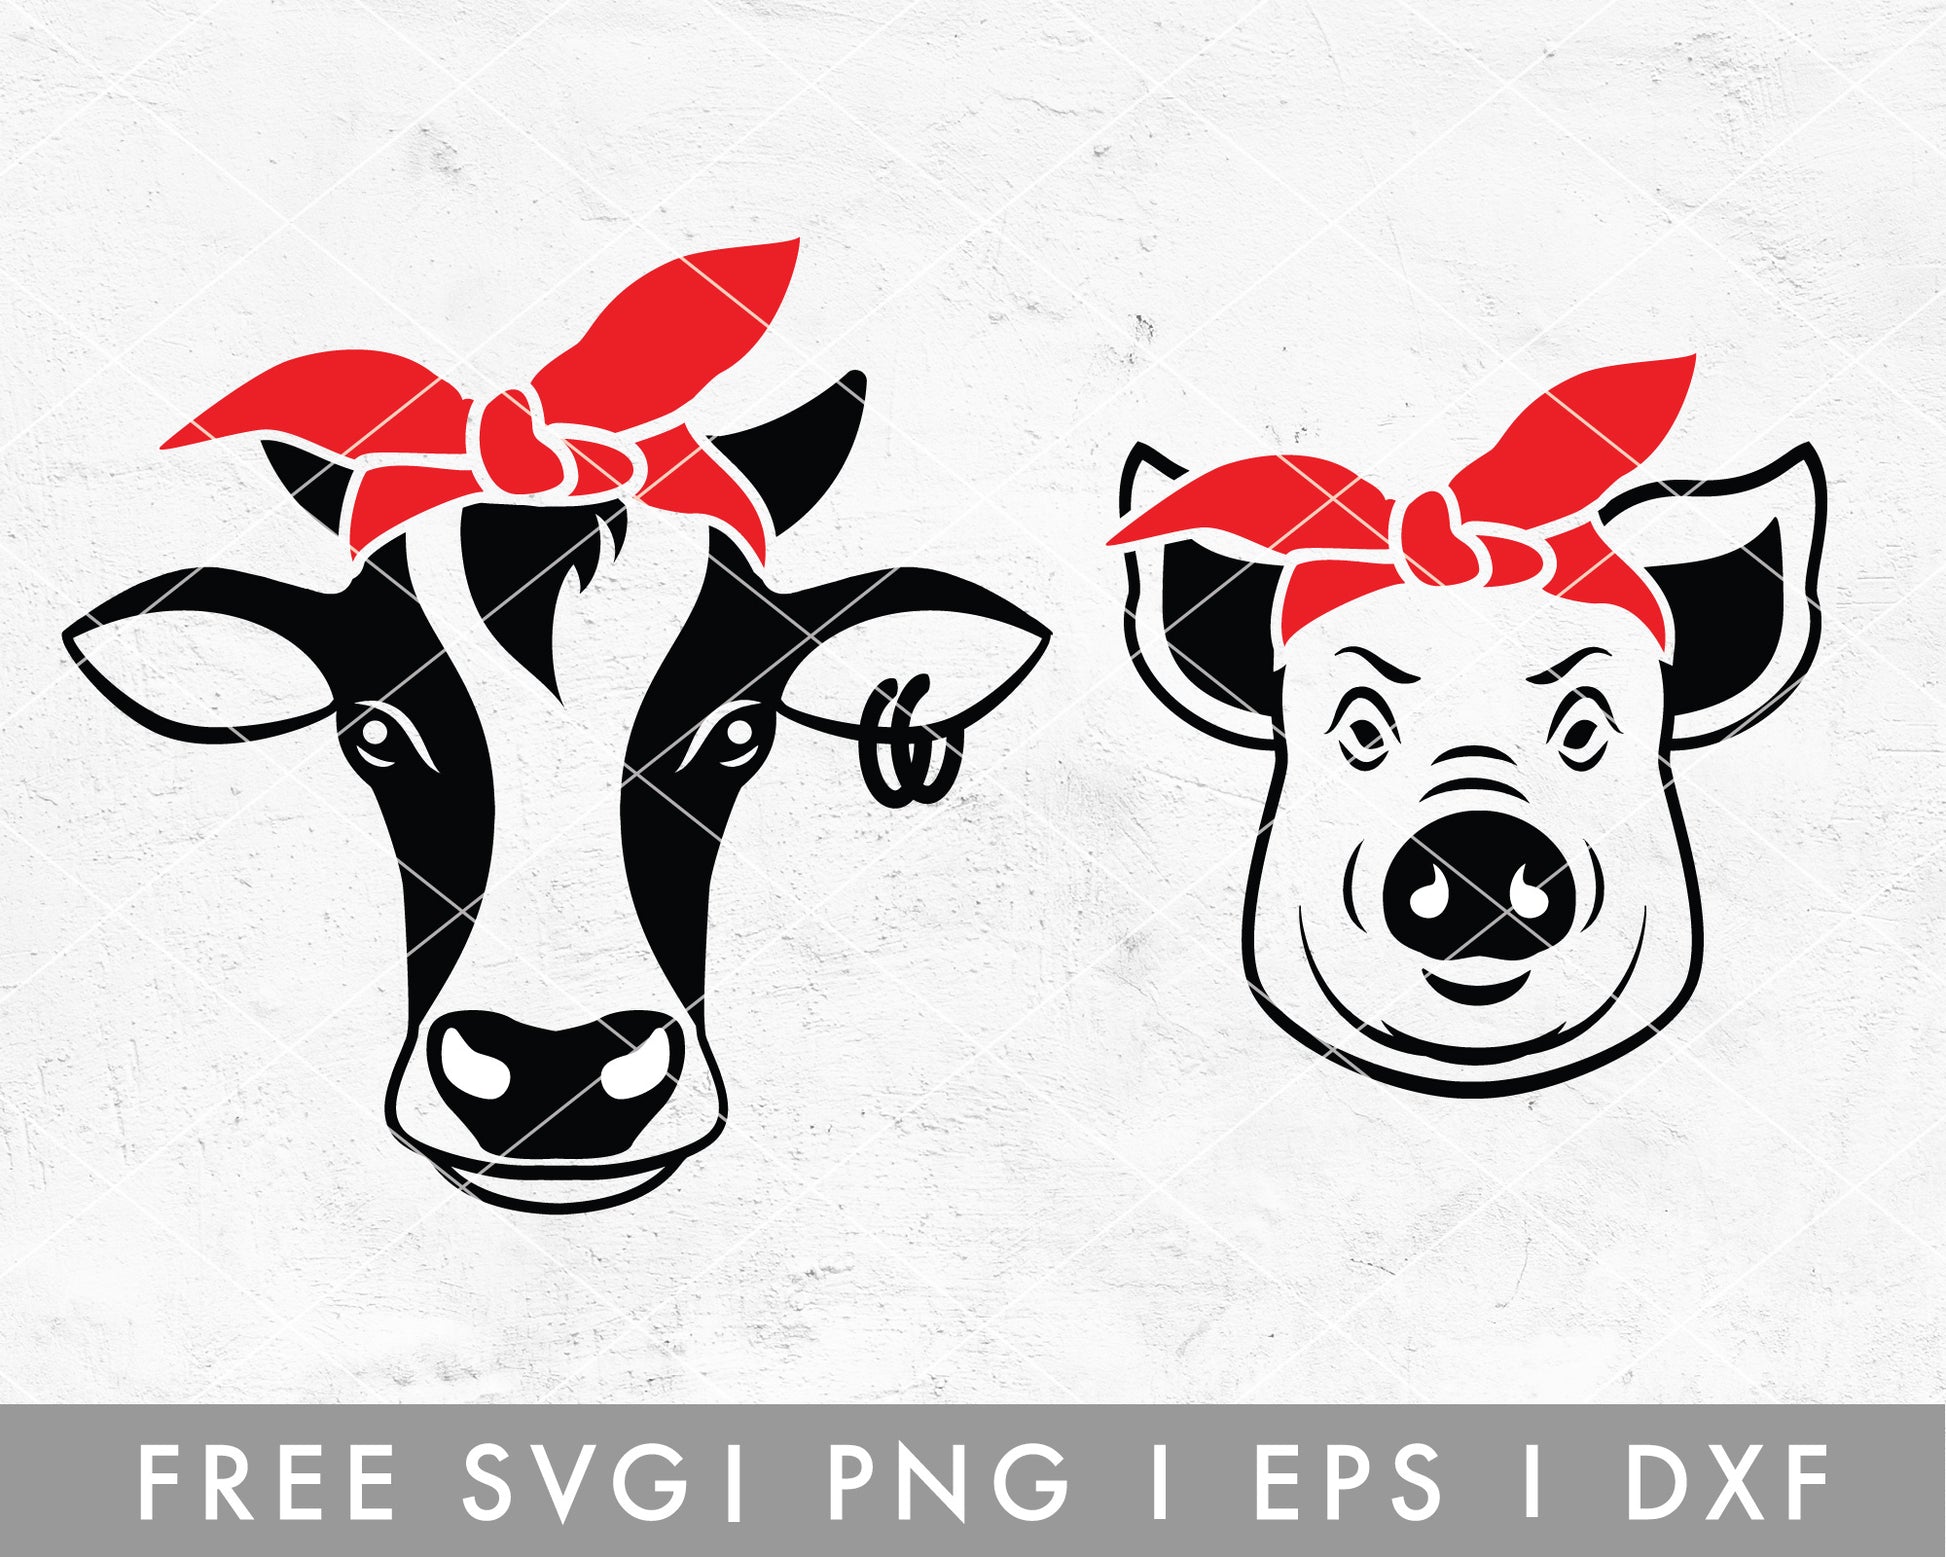 FREE FREE Farm Animal SVG | Heifer Cow Cut File for Cricut, Cameo Silhouette | Free SVG Cut File